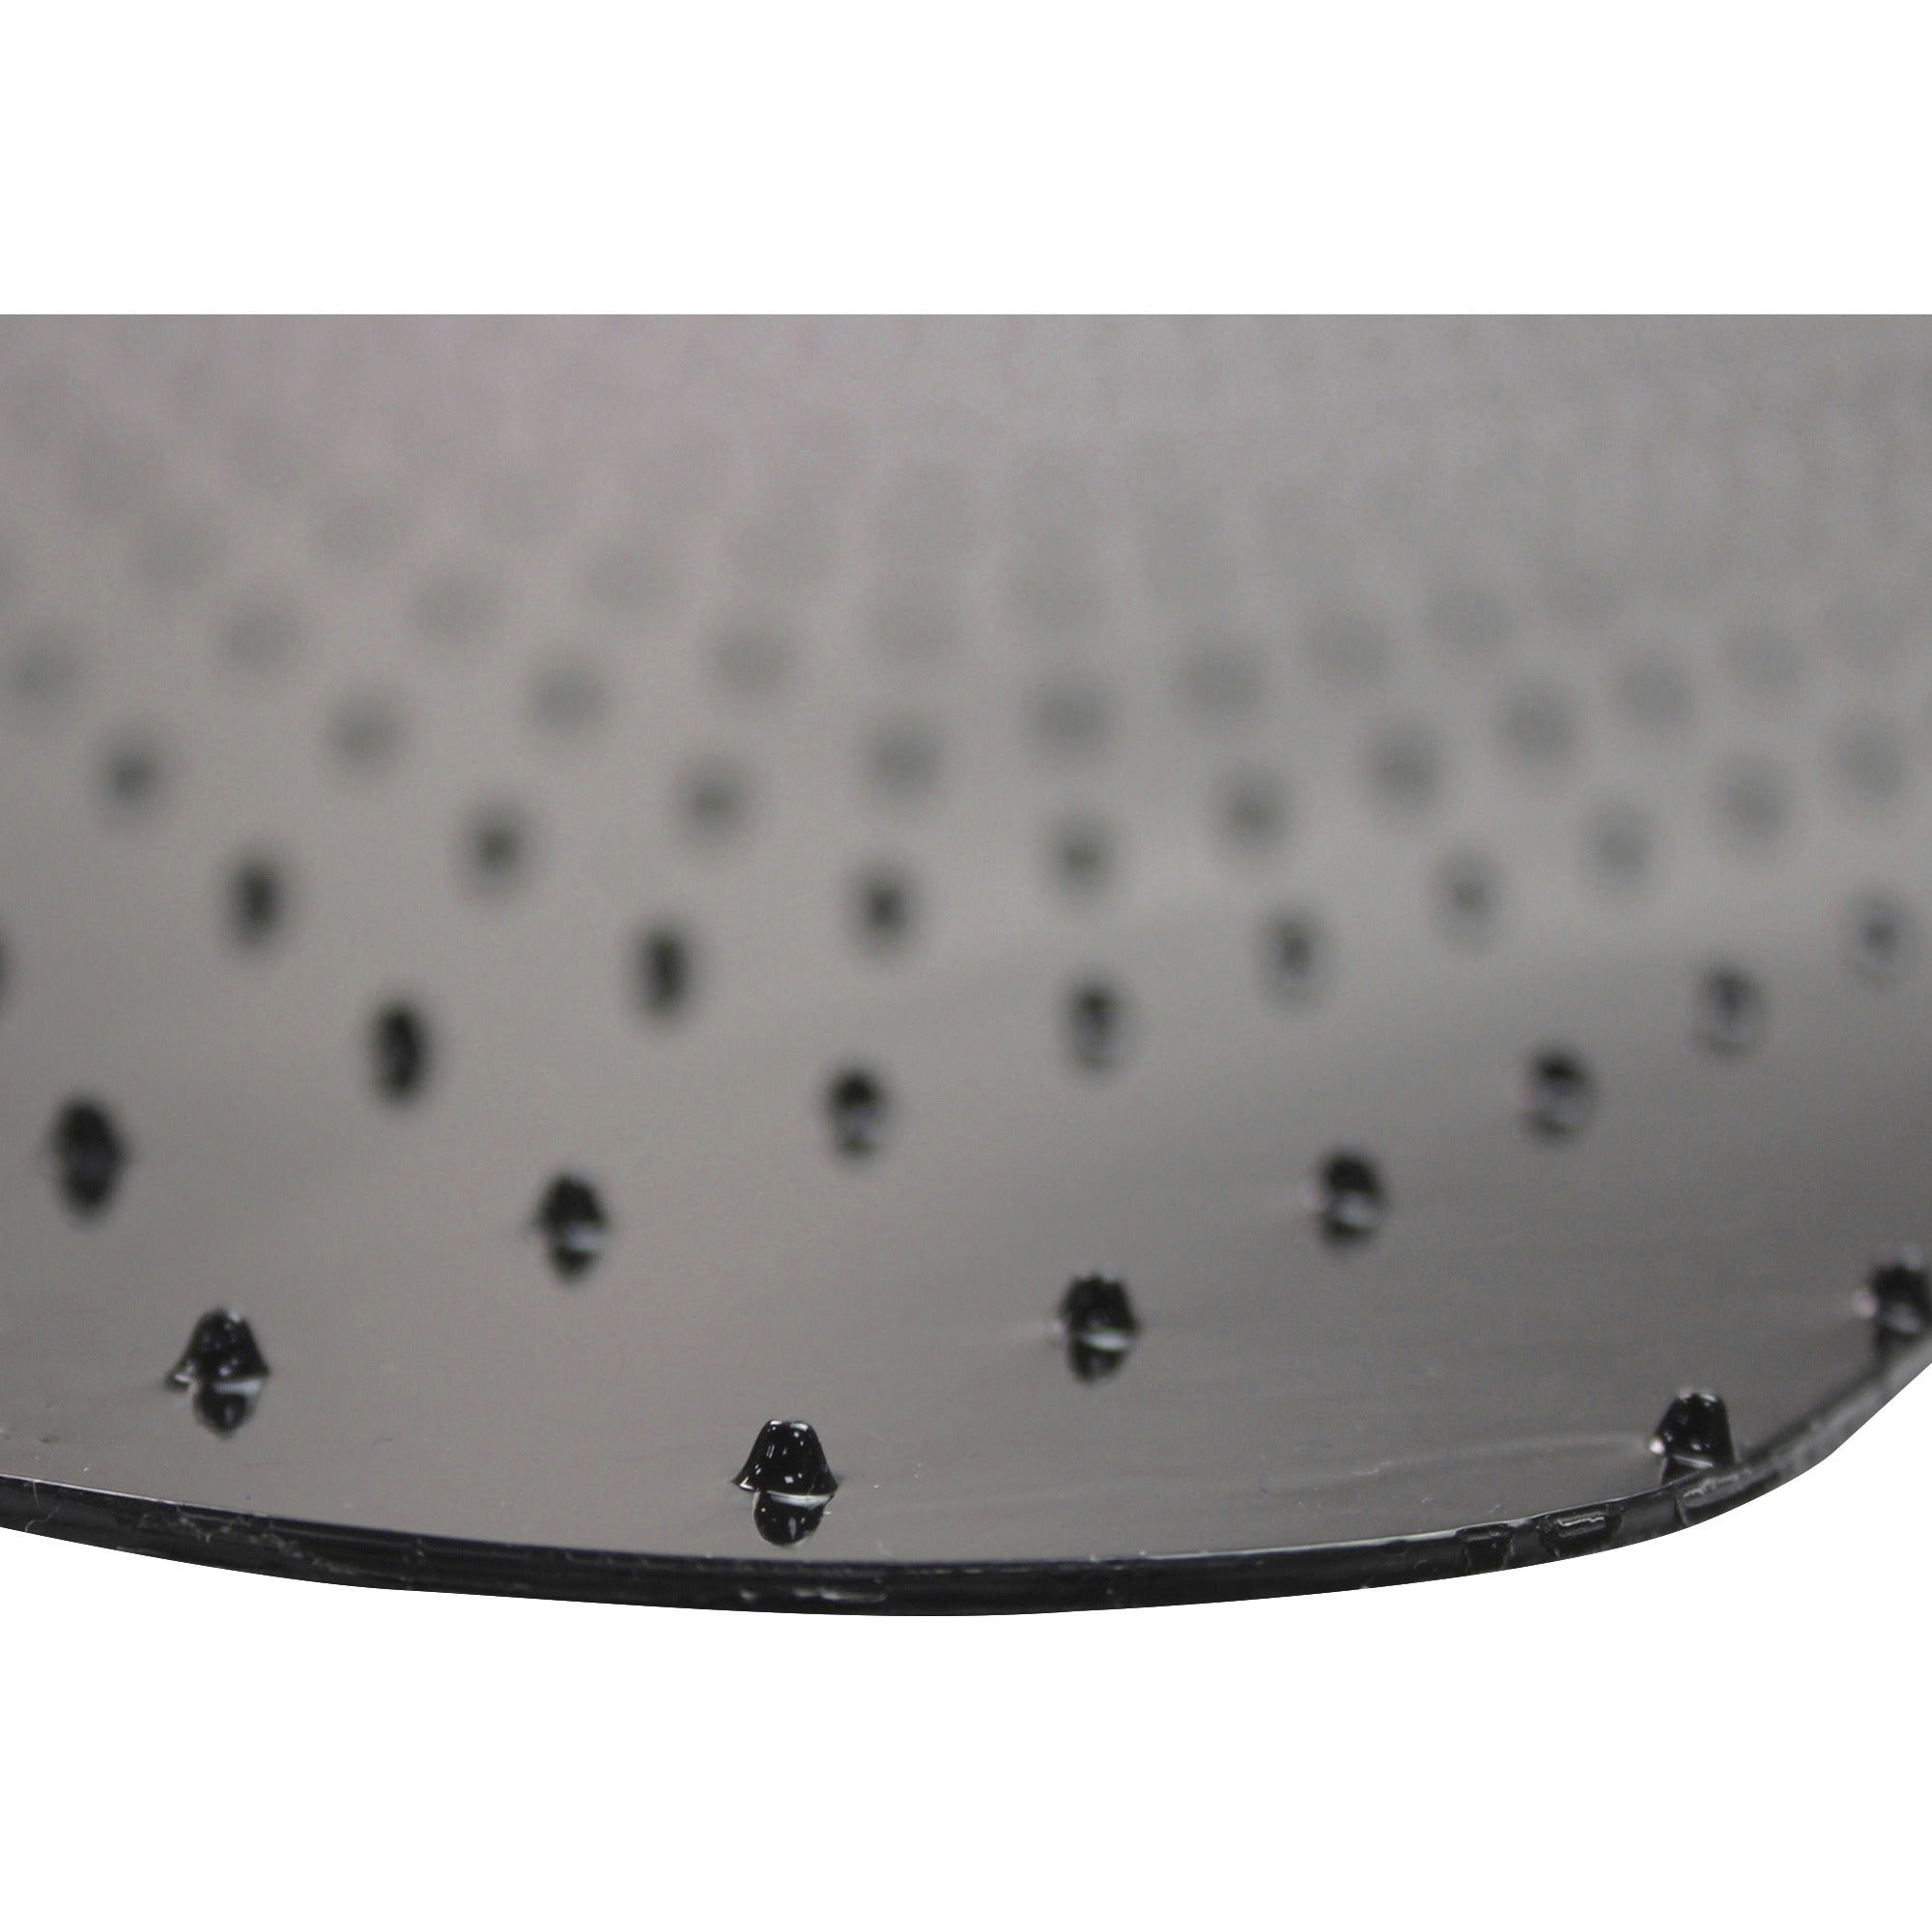 advantagemat-black-vinyl-lipped-chair-mat-for-carpets-45-x-53-carpeted-floor-53-length-x-45-width-x-0090-depth-x-0090-thickness-lip-size-25-length-x-12-width-lipped-classic-polyvinyl-chloride-pvc-vinyl-black-1each_flrfc114553llbv - 1